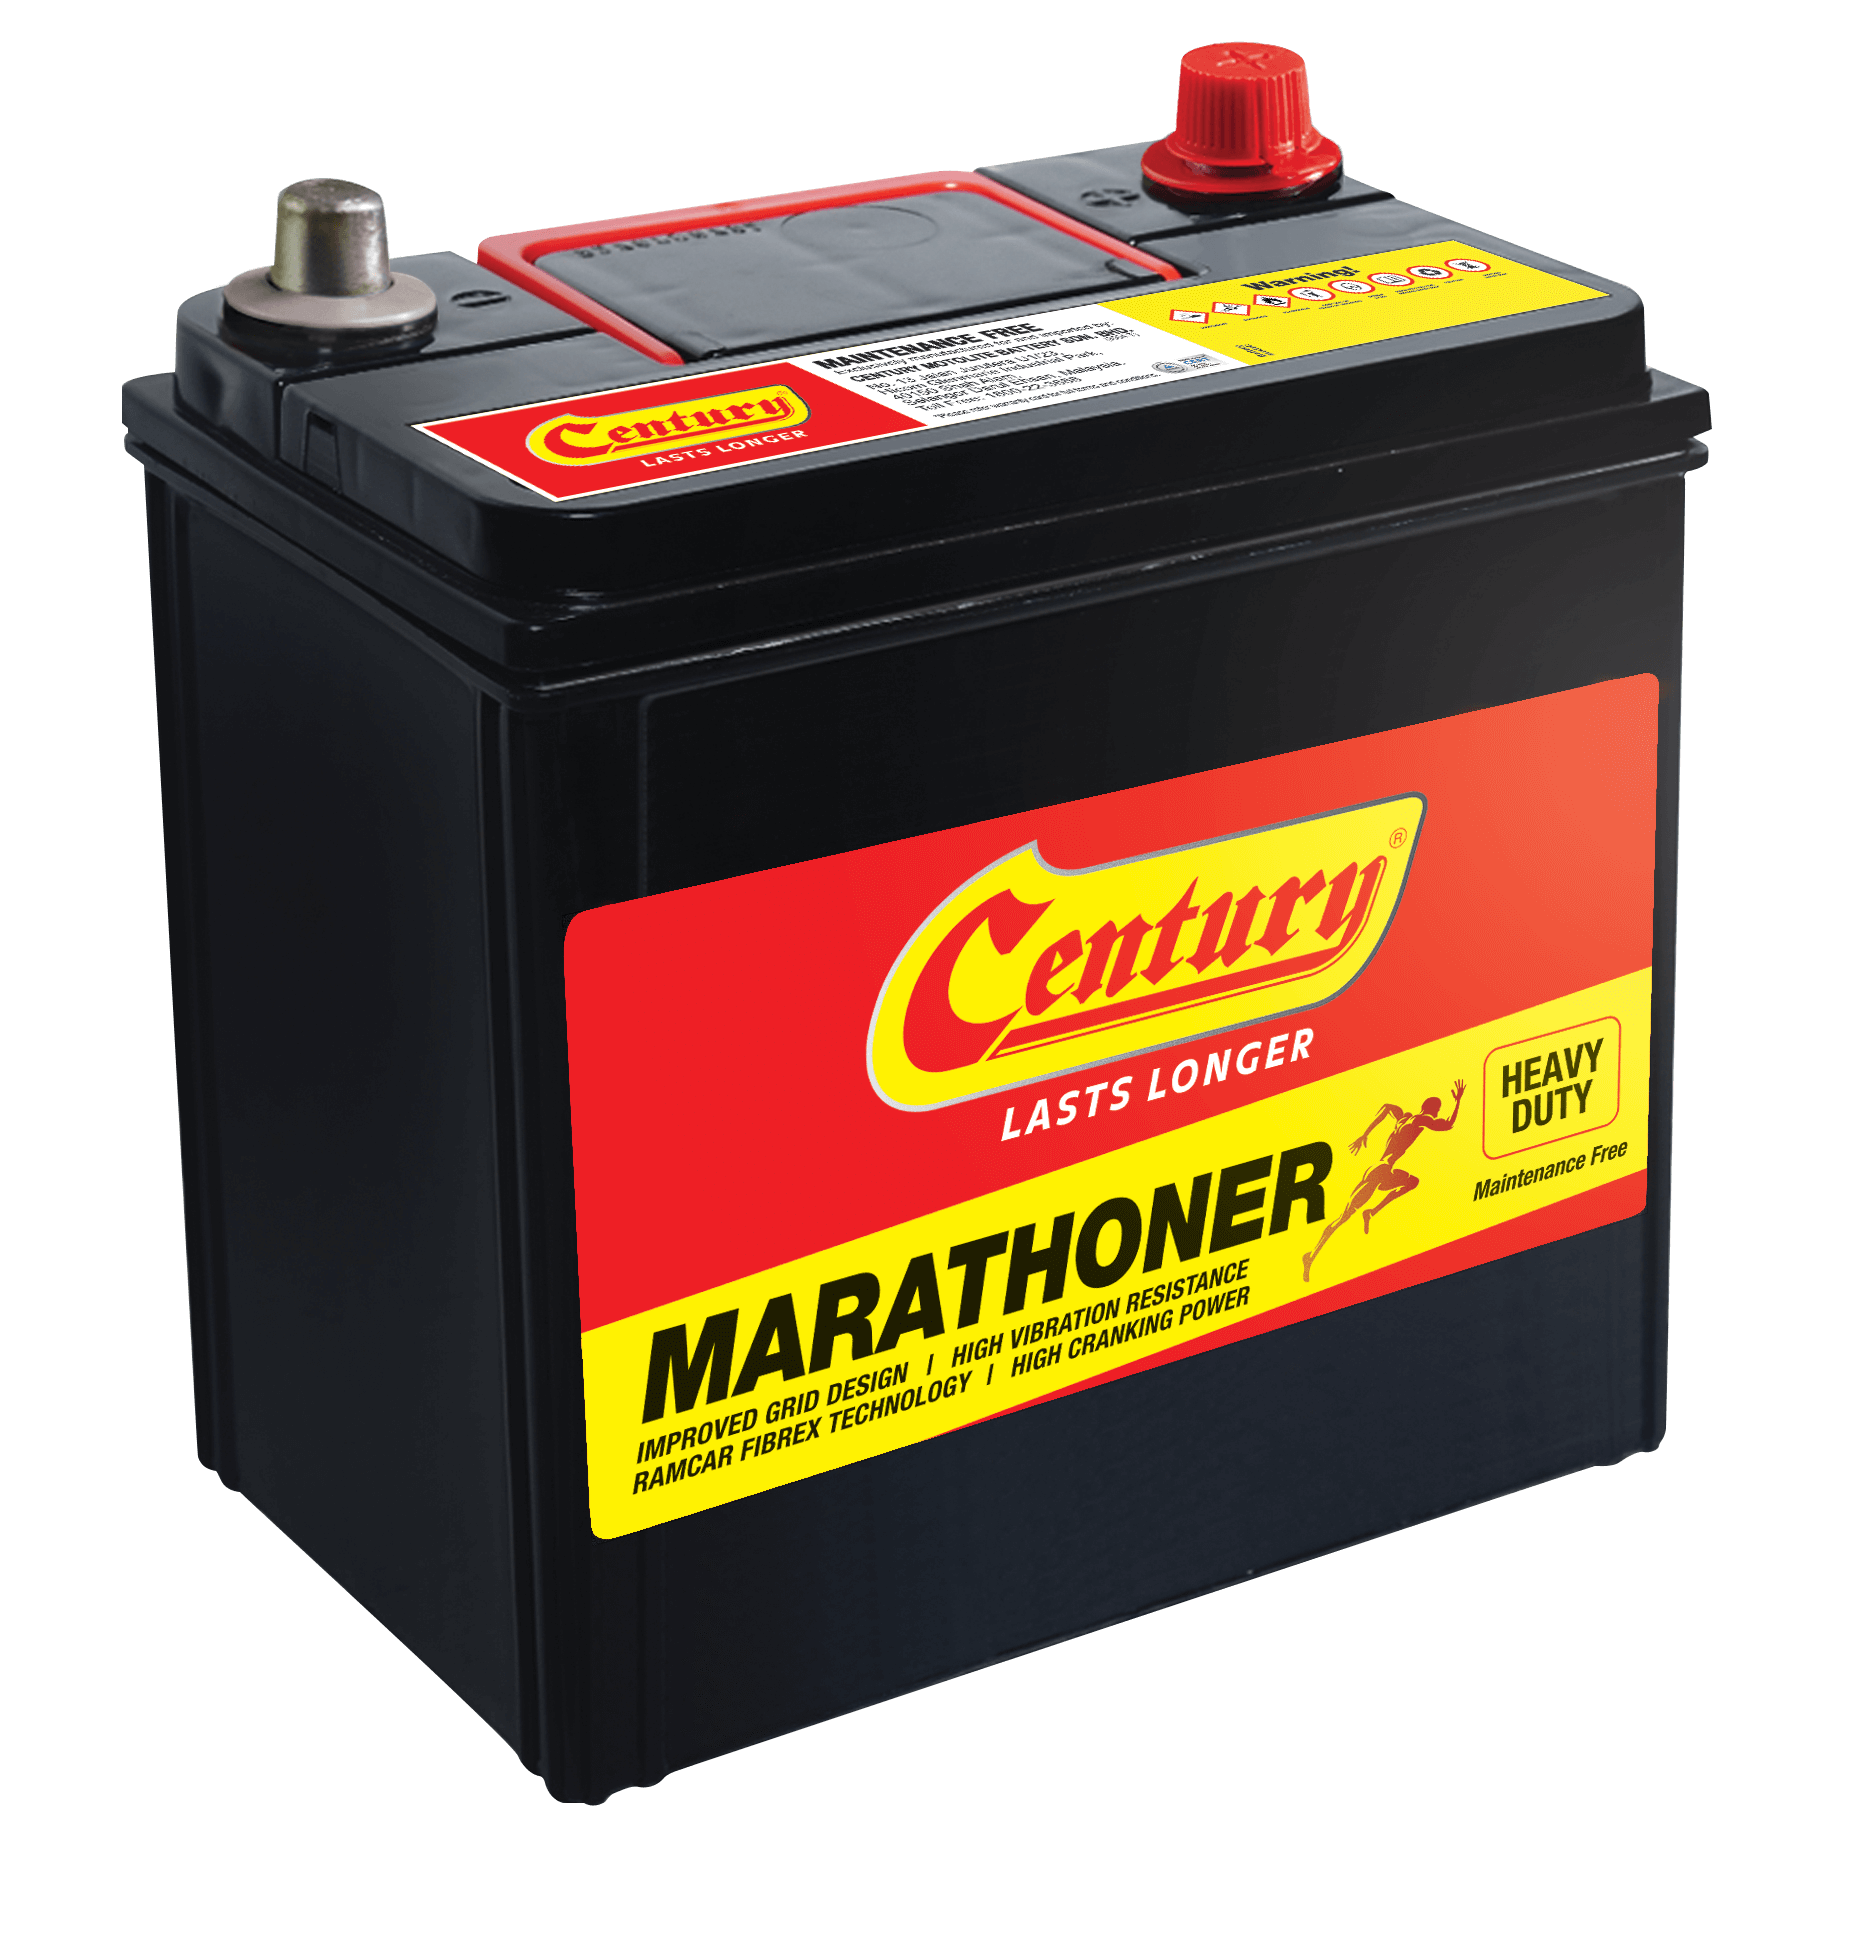 Century Battery Logo - Century Marathoner - Free Delivery and Installation